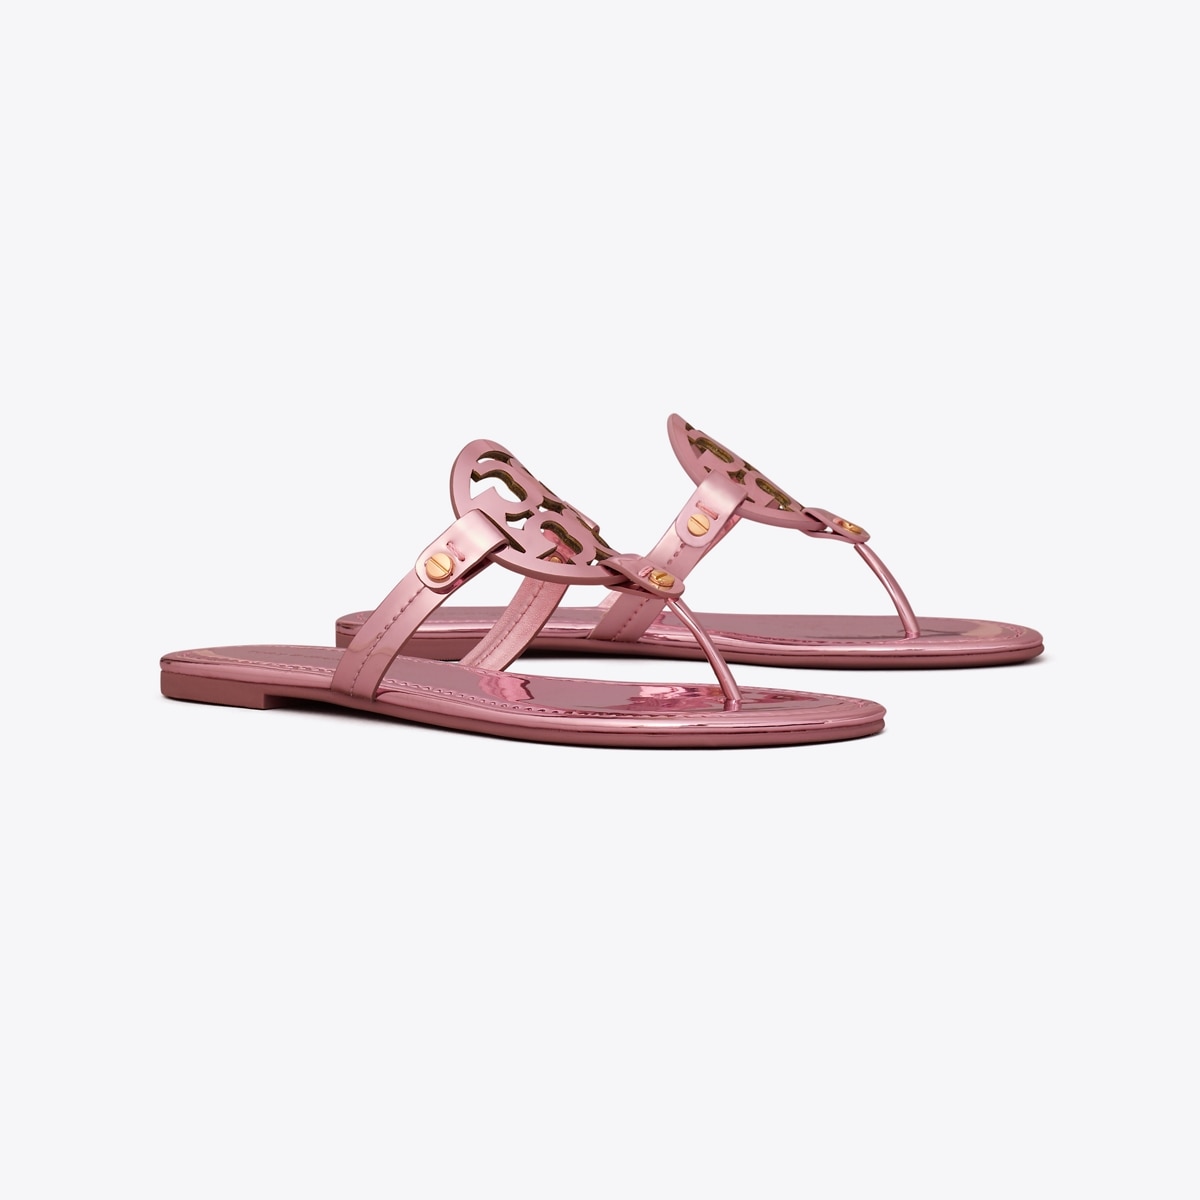 Tory Burch Women's Miller Metallic Sandals - Petunia - Size 8